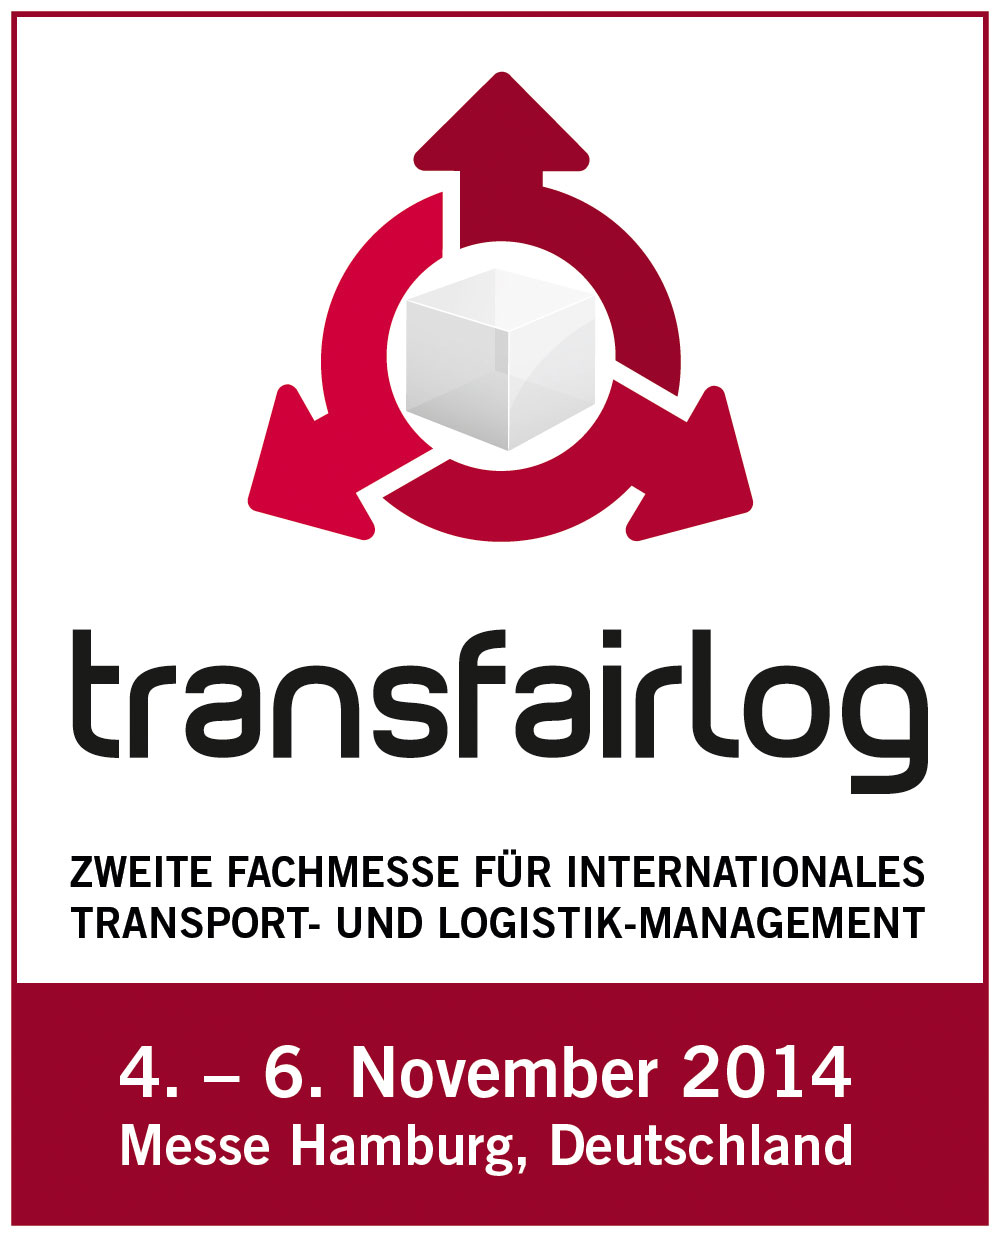 transfairlog-logo-datum-14-jpg-d